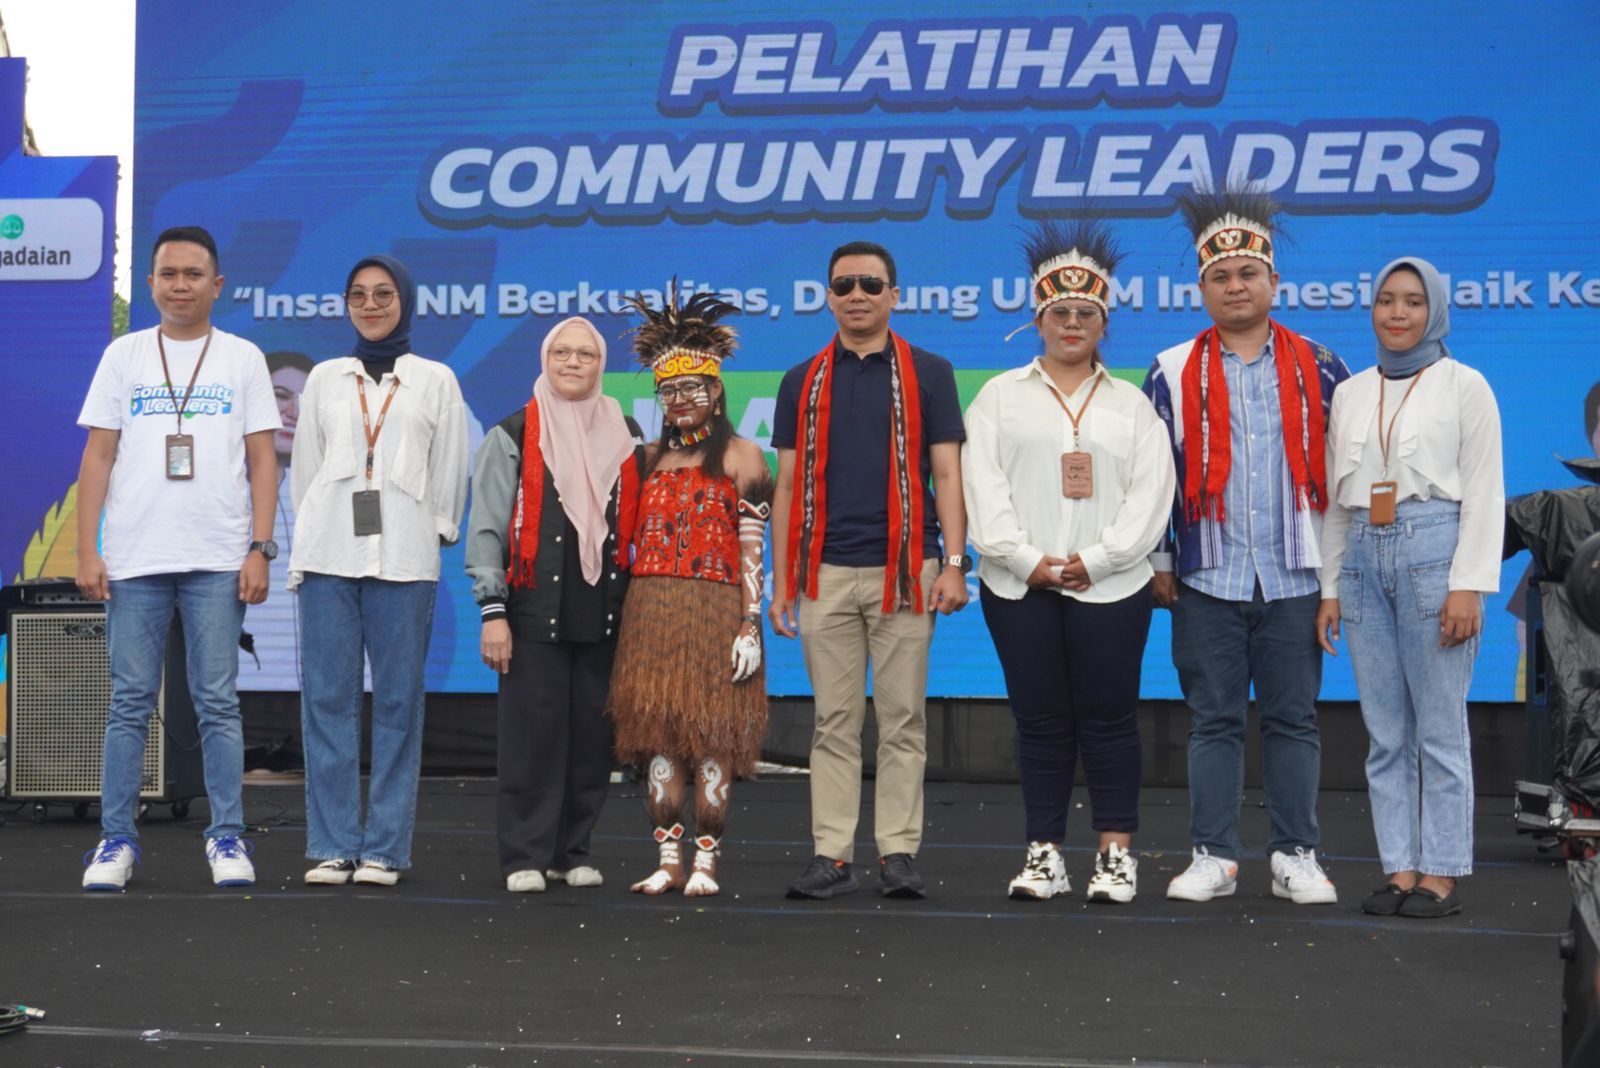 Community Leaders Makassar, Ambon, Papua, dan Papua Barat Dorong Insan PNM Bekualitas Dukung UMKM Naik Kelas